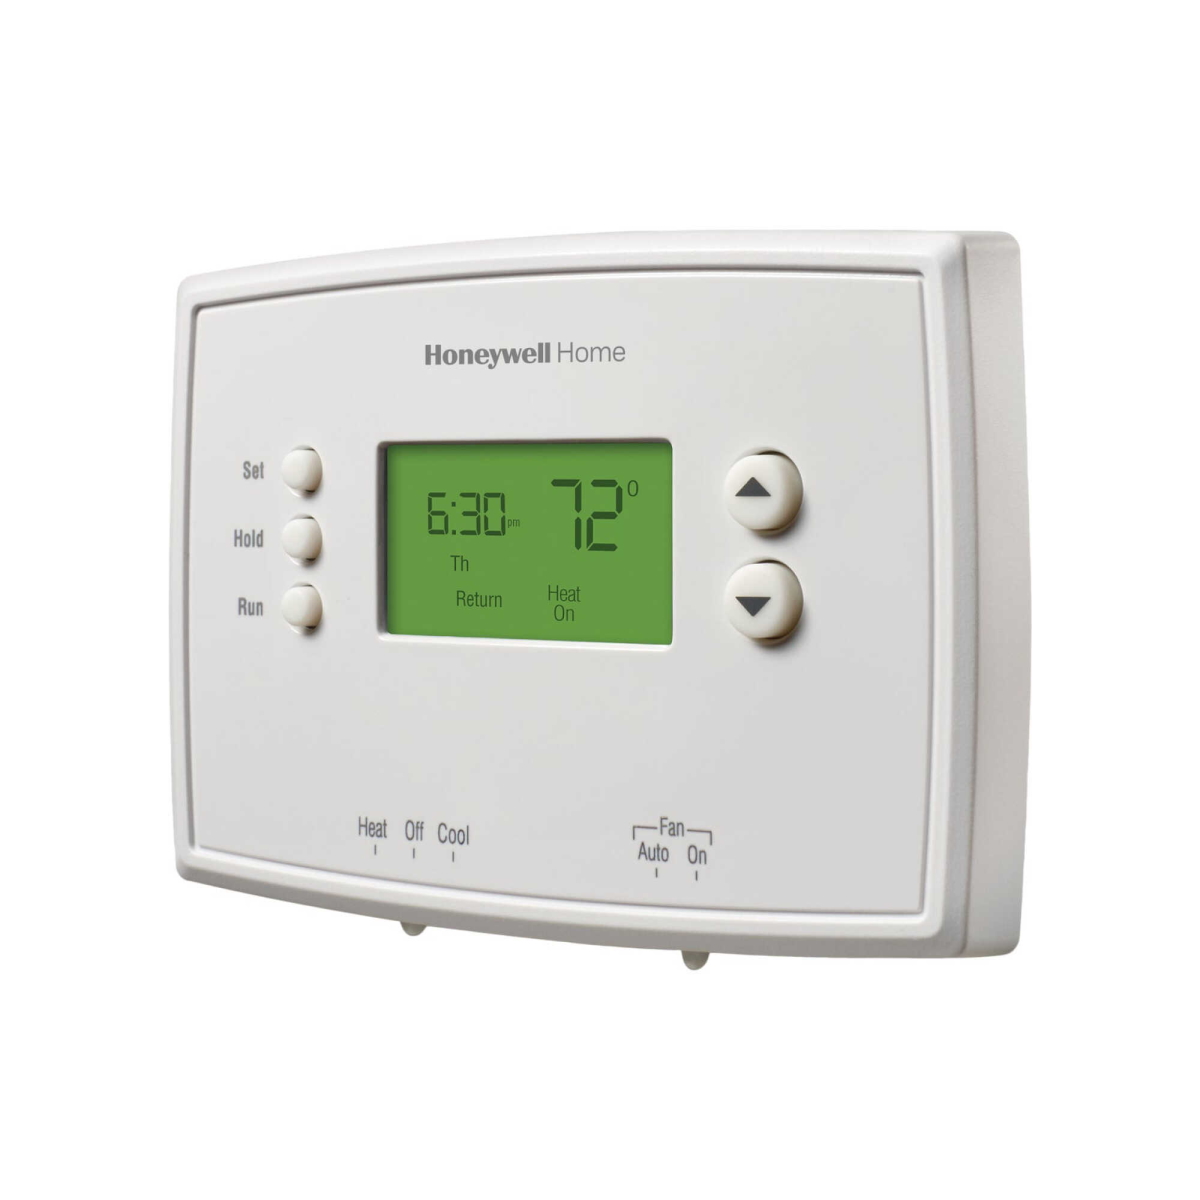 https://www.berings.com/wp-content/uploads/2020/05/Honeywell-Home-5-2-Day-Programmable-White-Digital-Thermostat.jpg